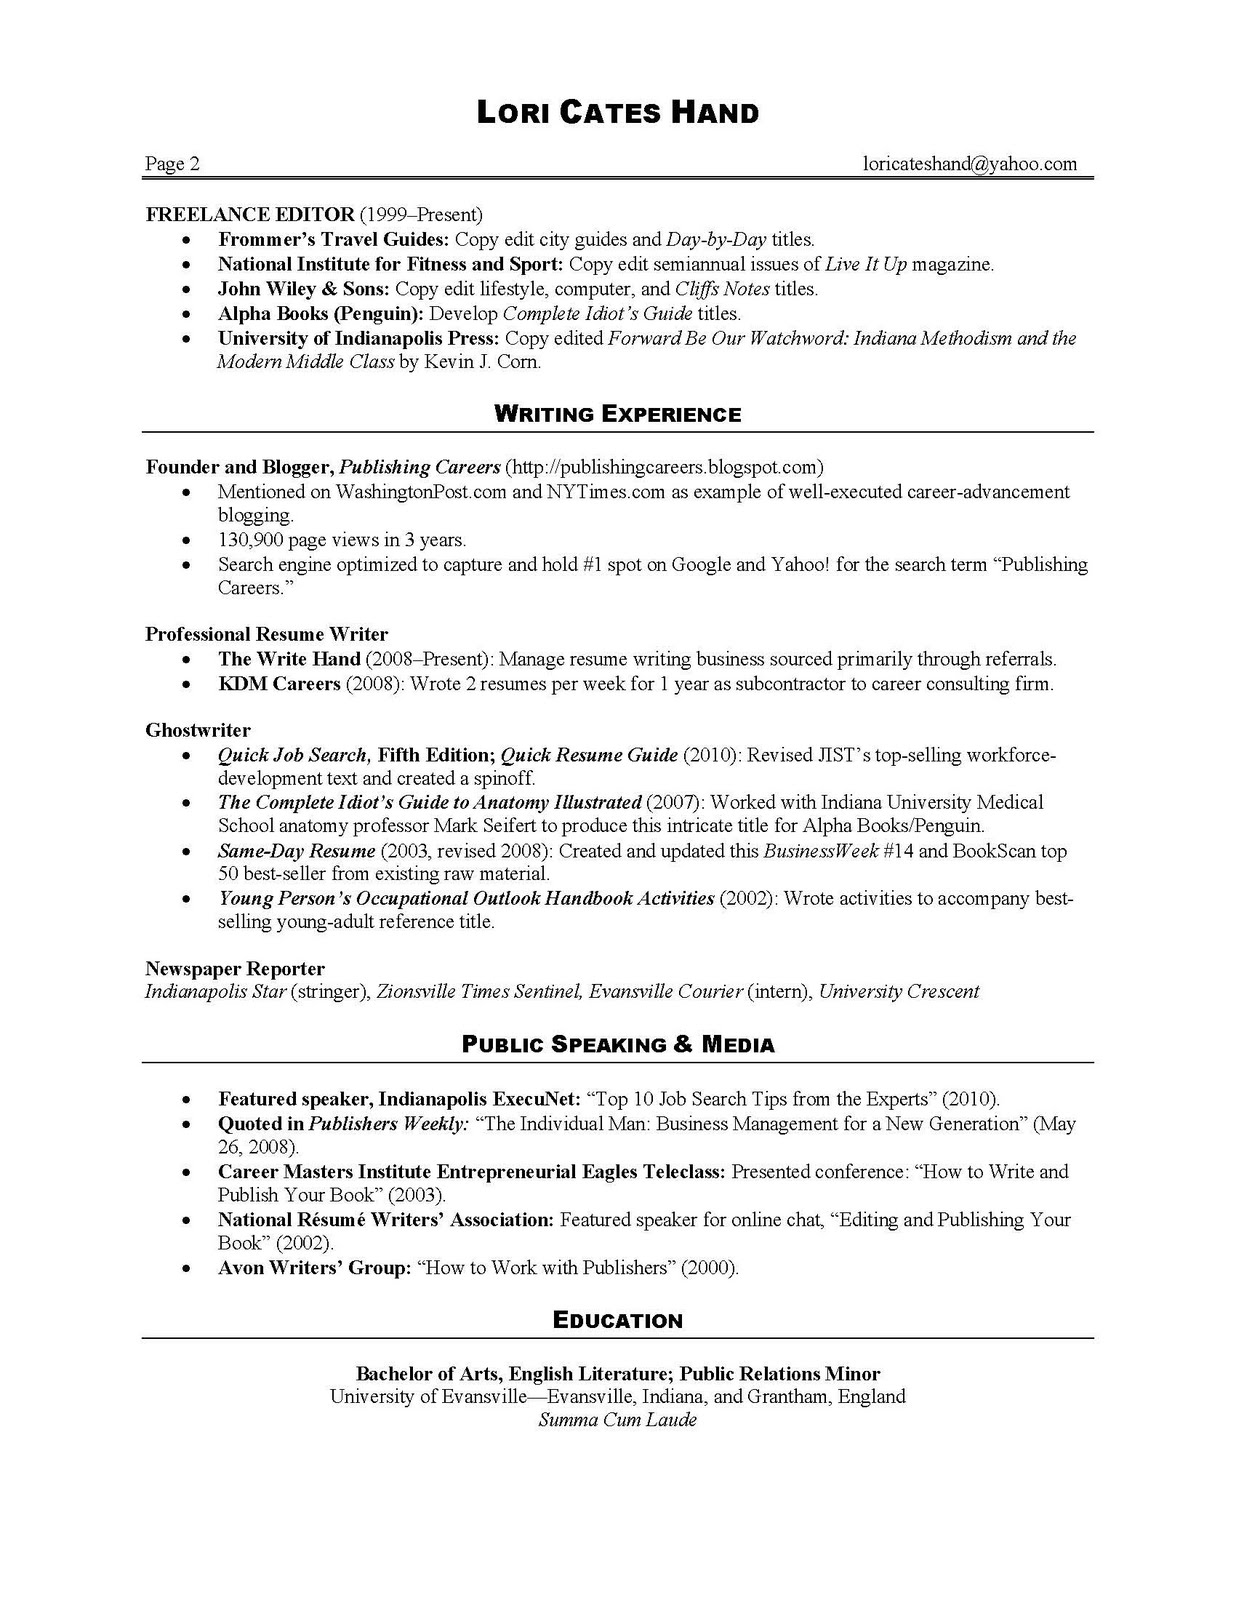 Conference planner resume